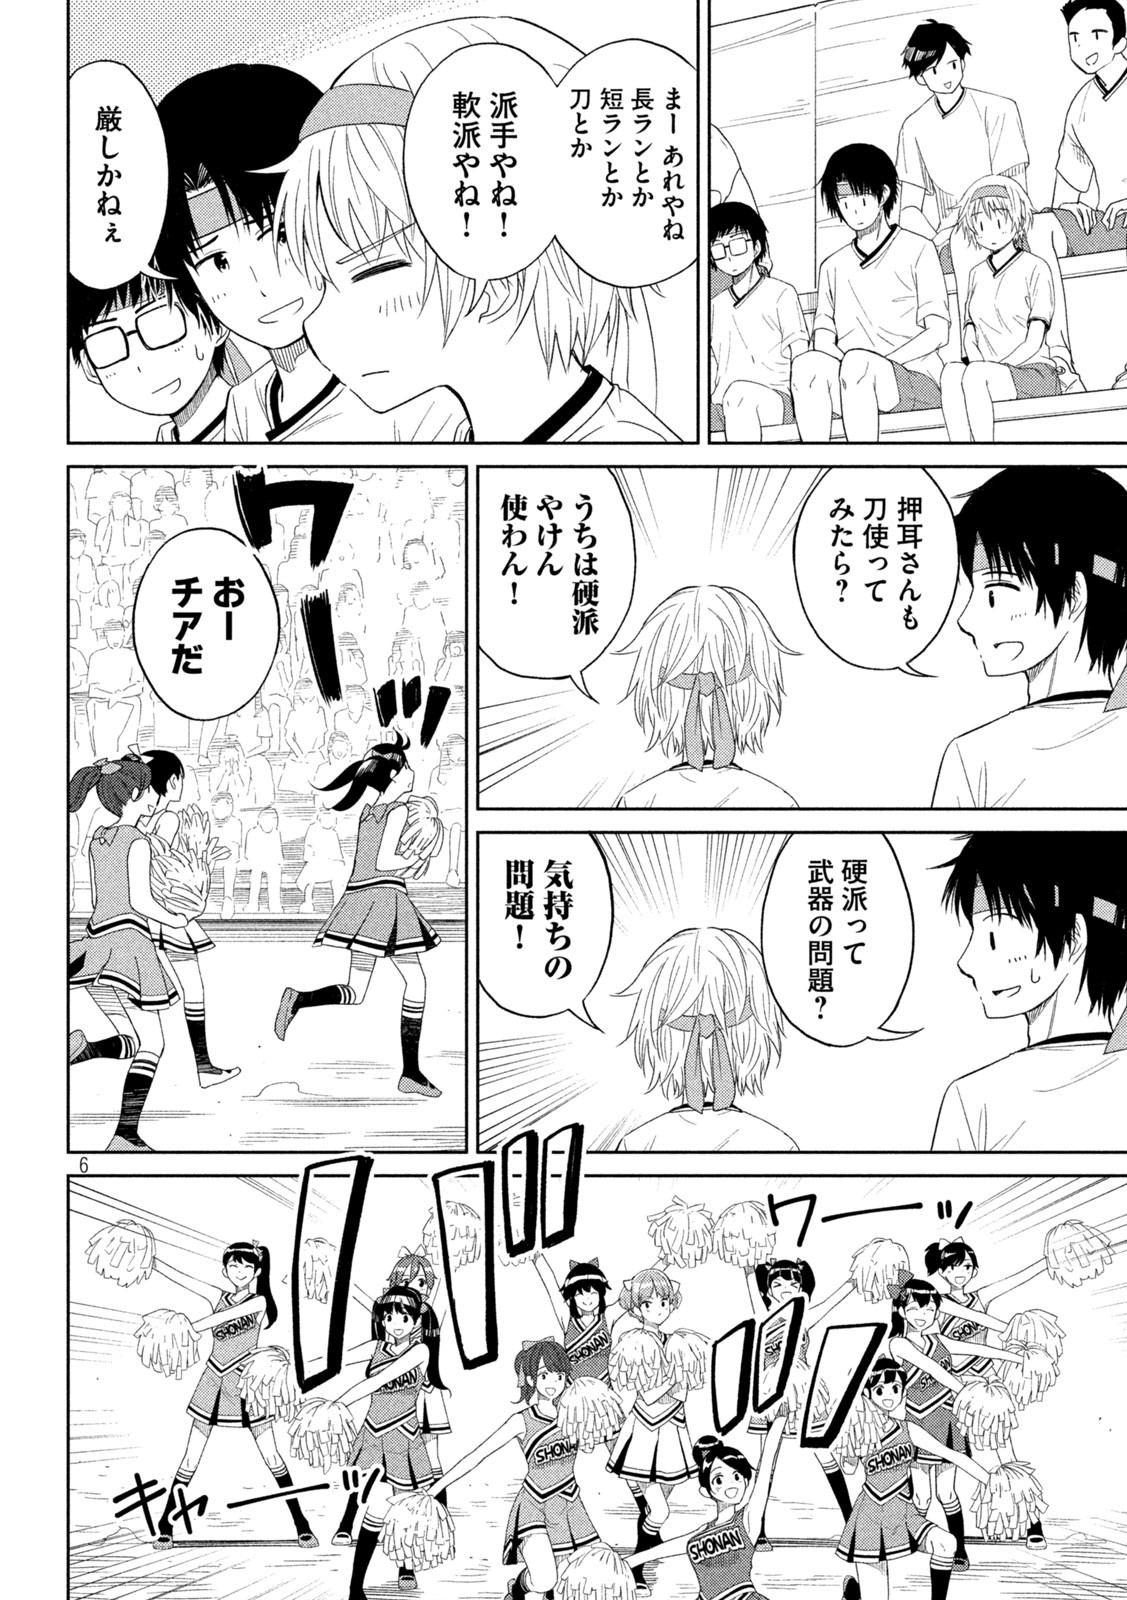 Koharu haru! - Chapter 99 - Page 2